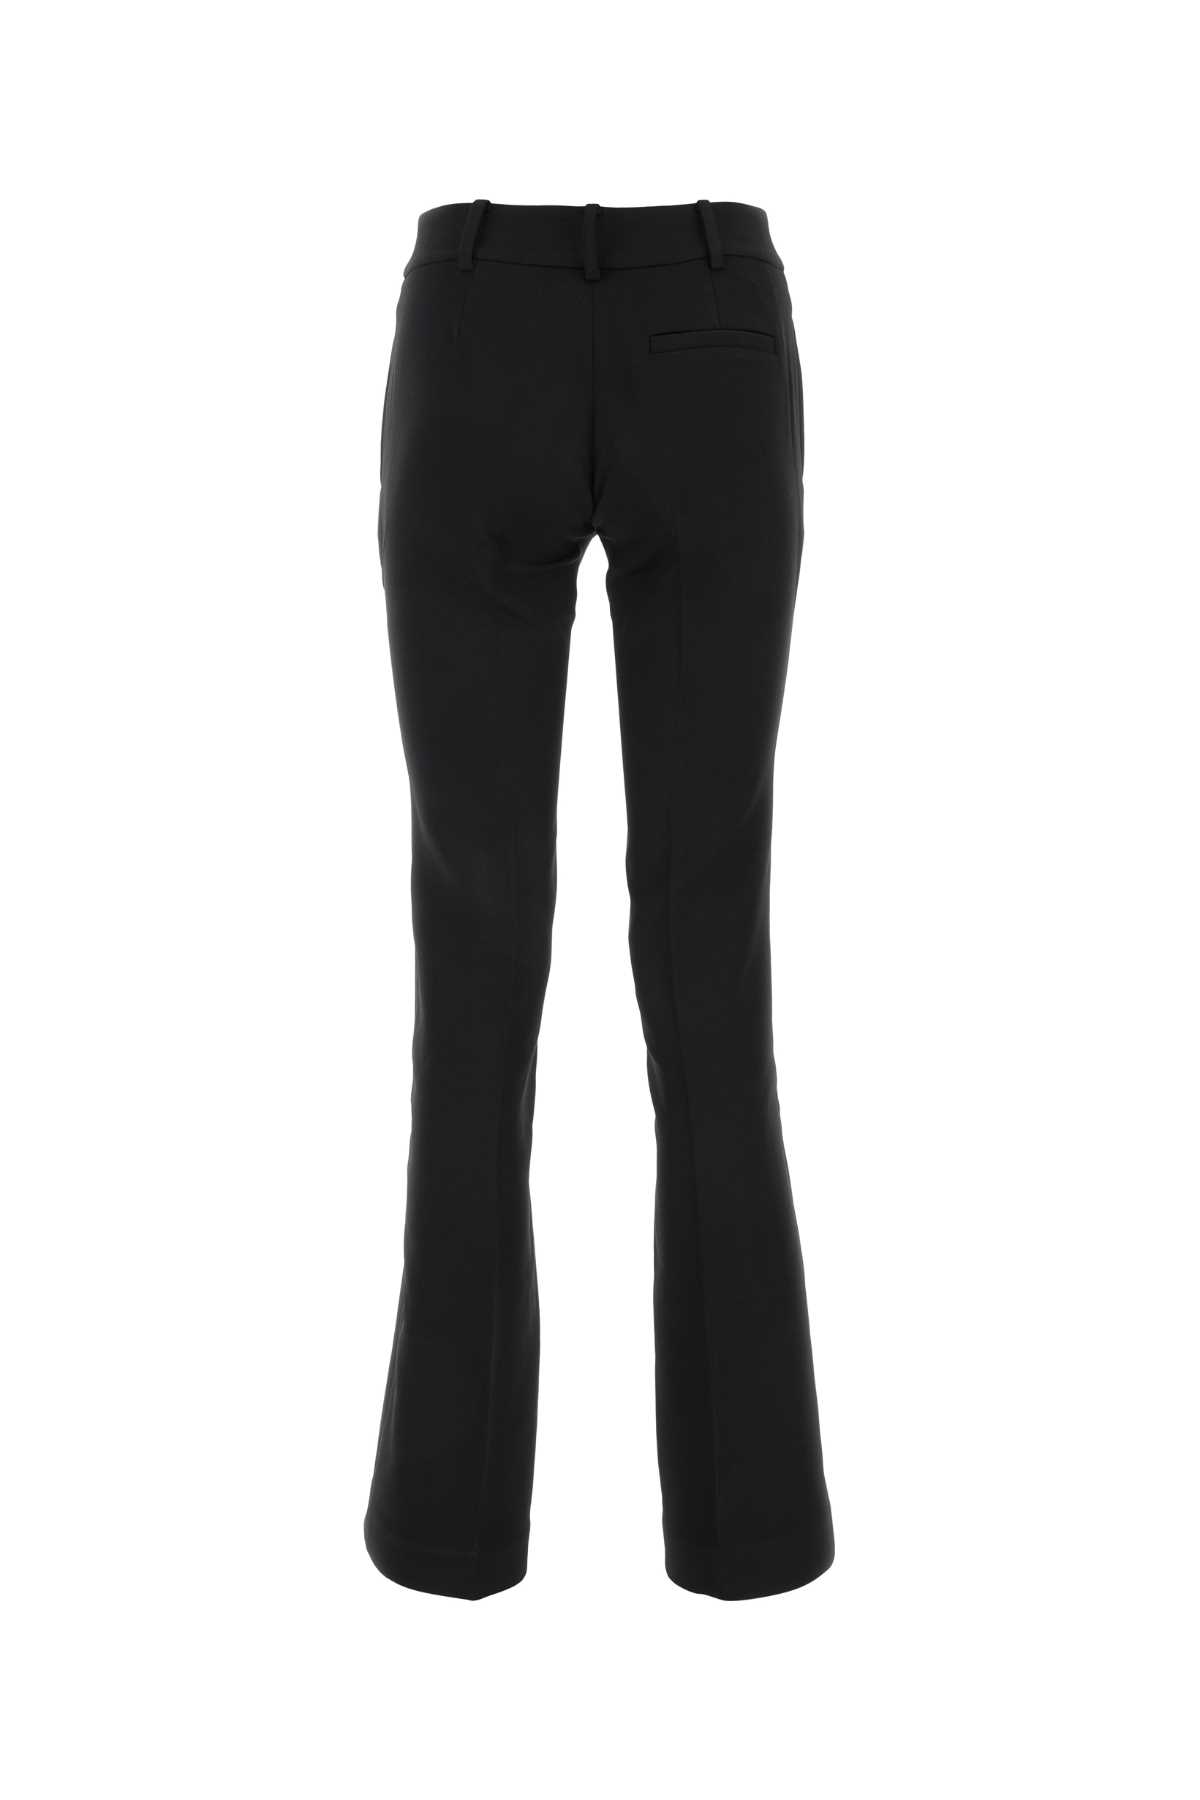 Michael Kors Black Stretch Polyester Pant